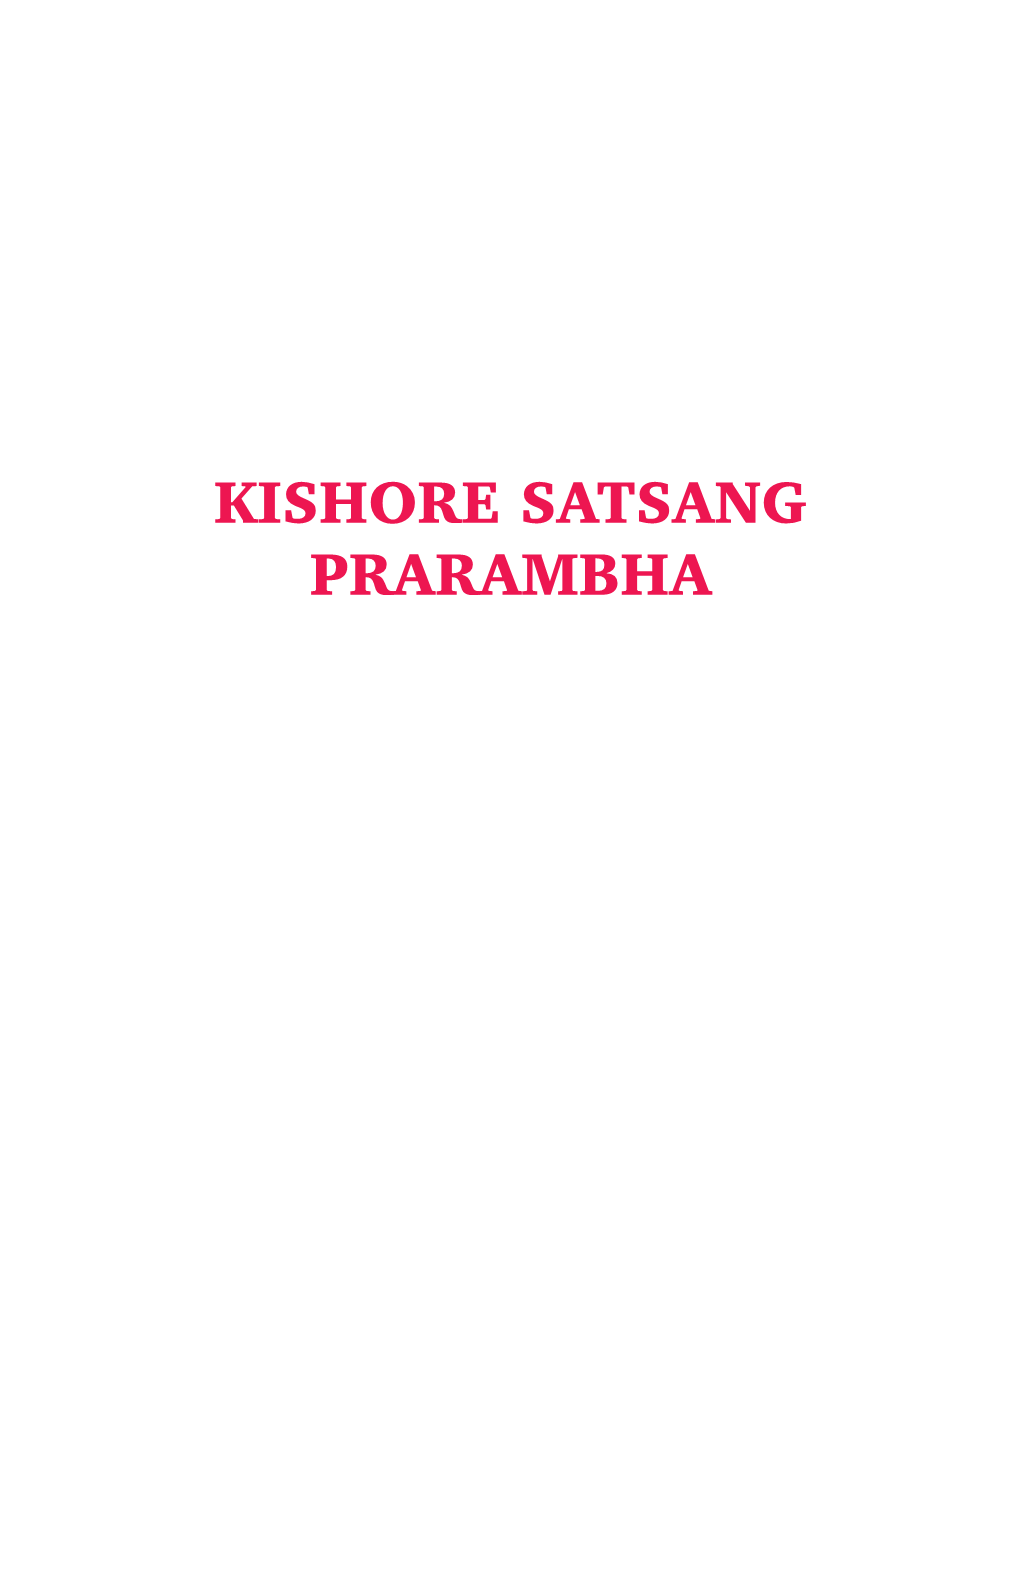 Kishore Satsang Prarambha